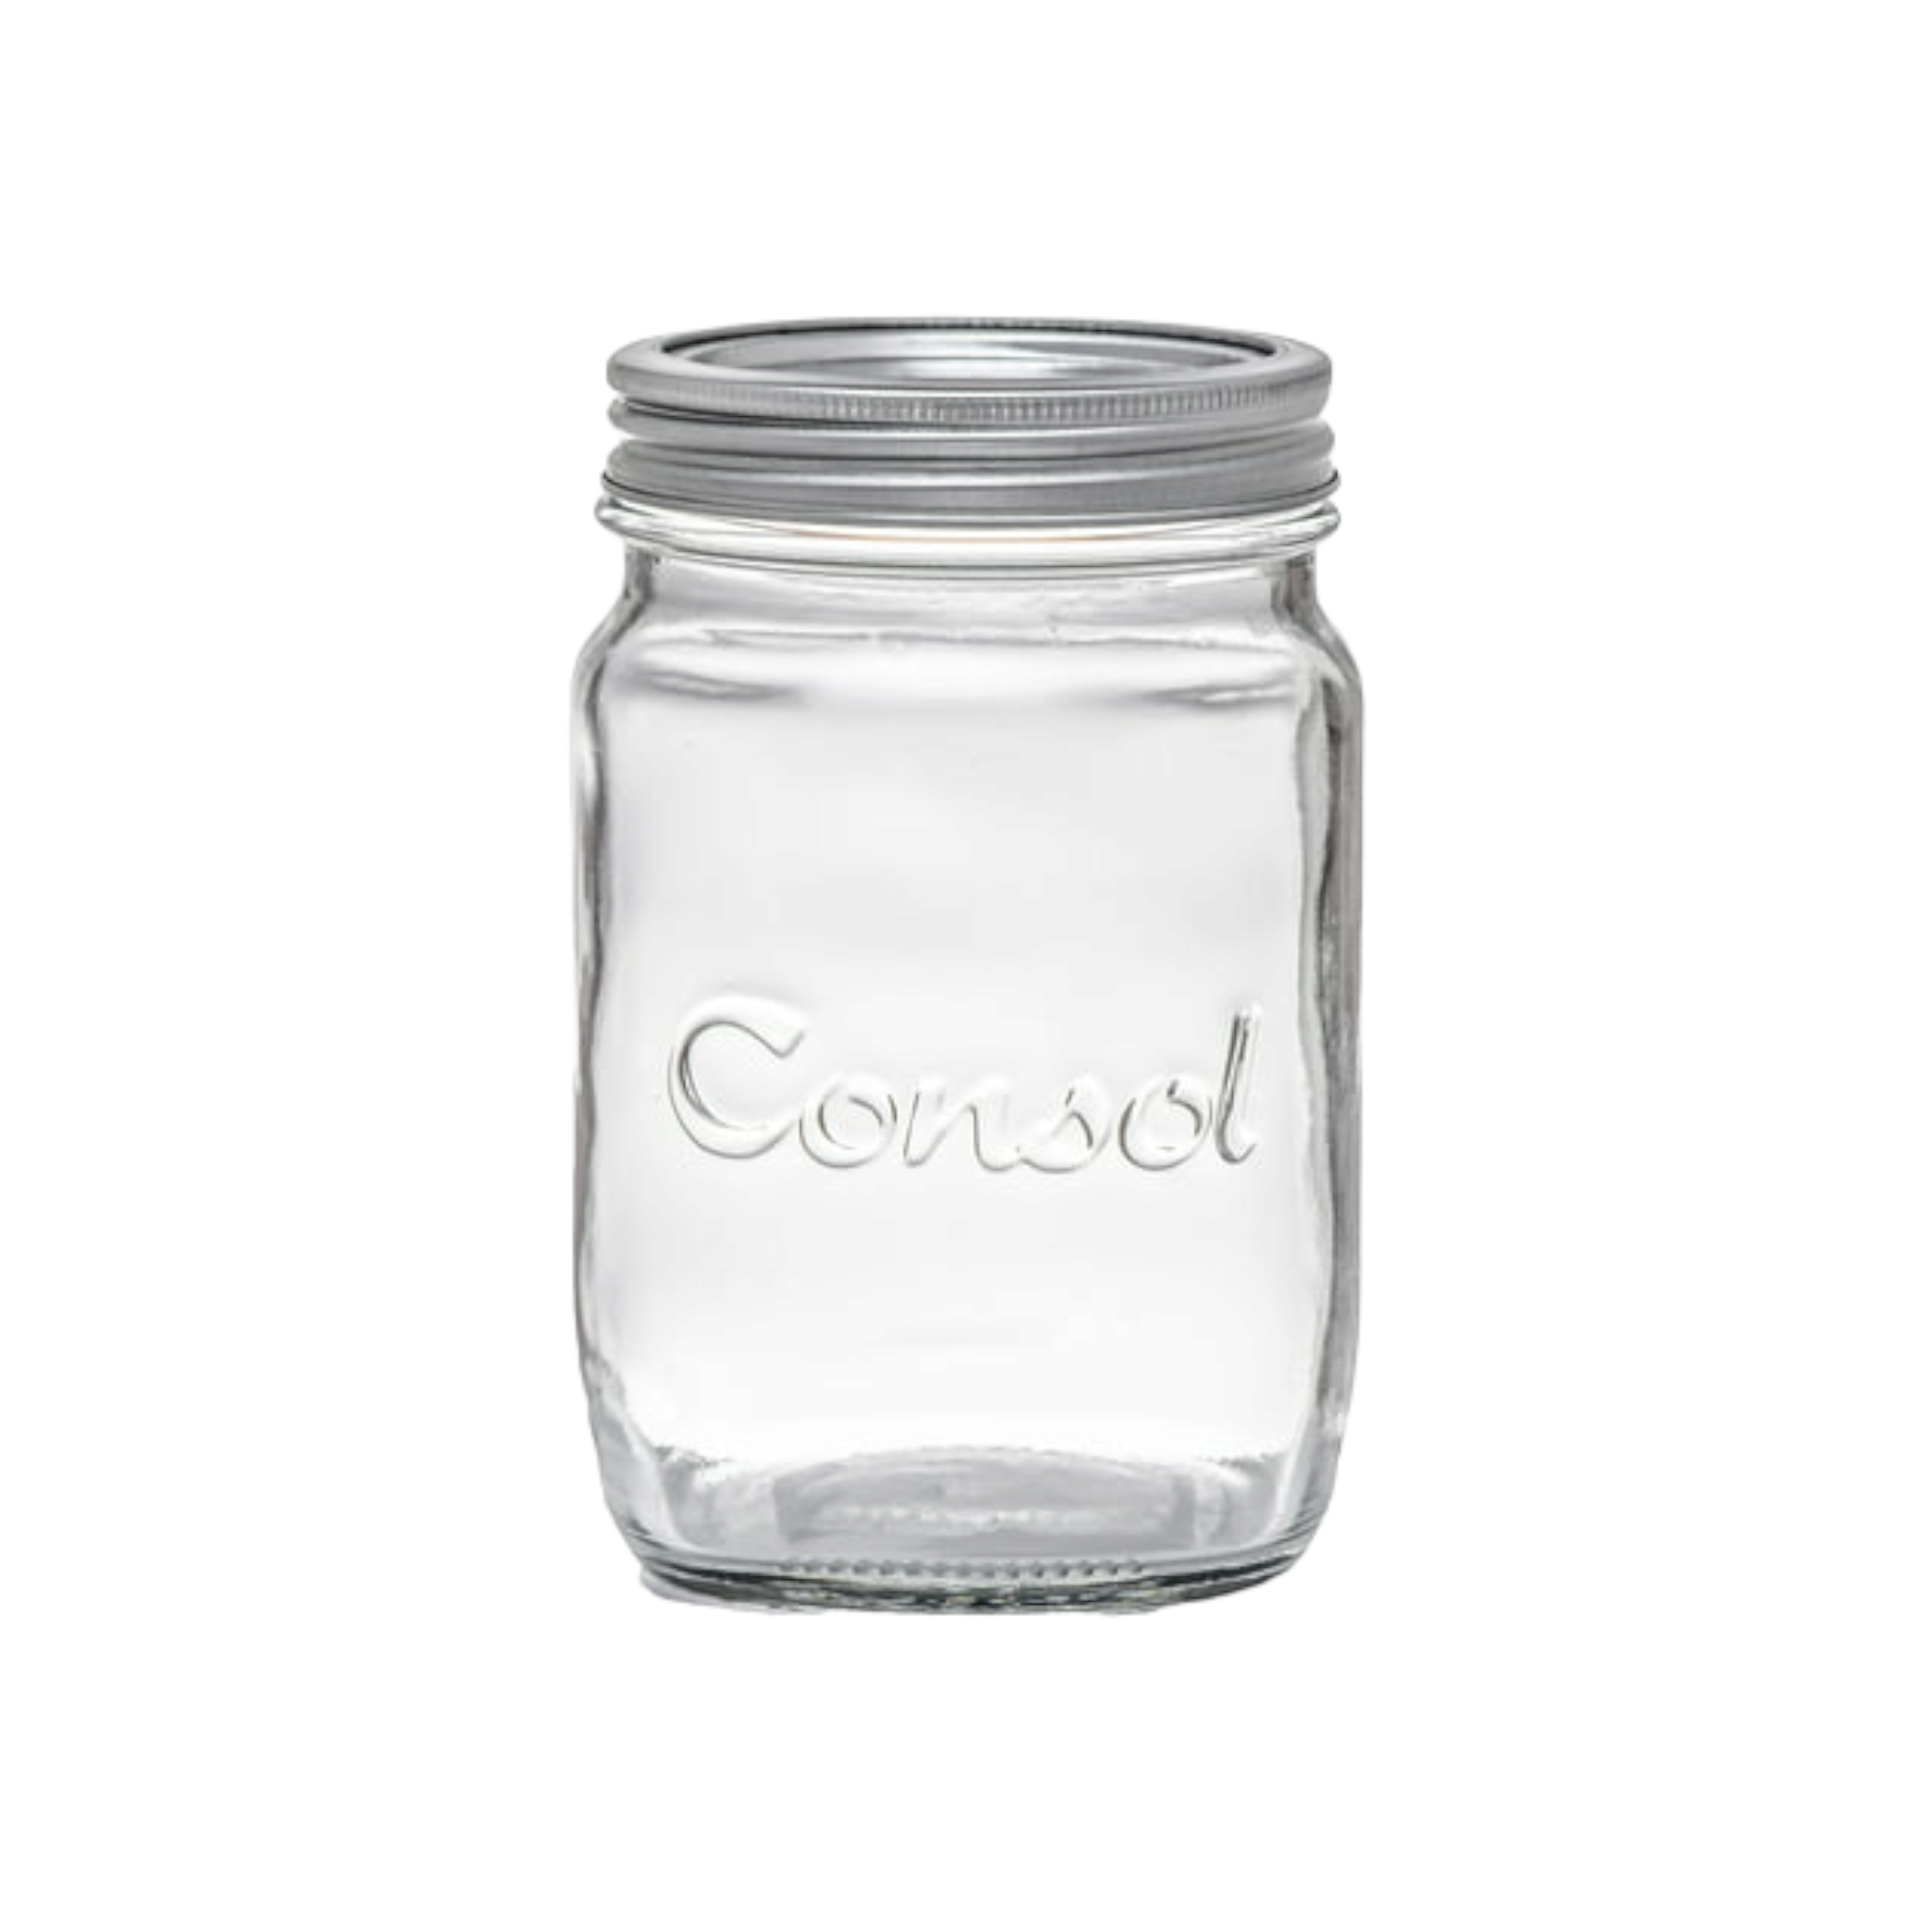 Consol 500ml Preserve Glass Jar 10418